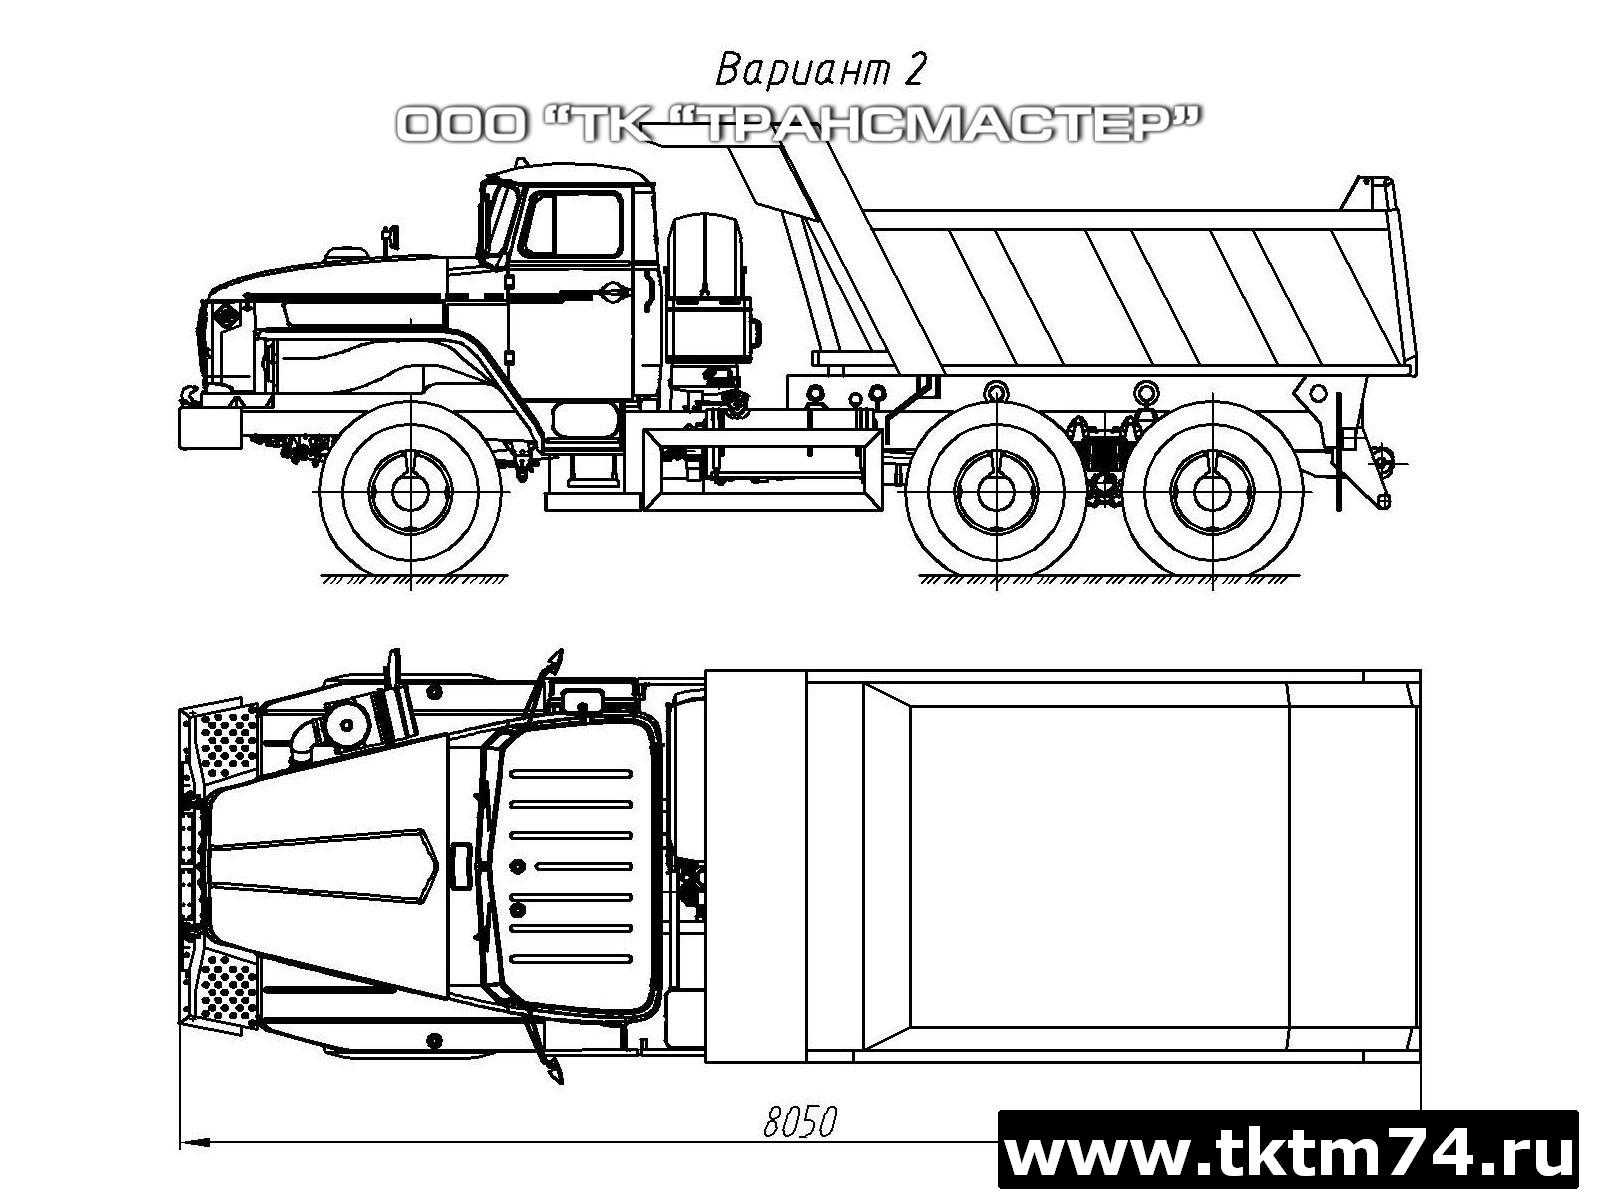 Технические характеристики и модификации грузового автомобиля урал-5557: разбираемся по порядку